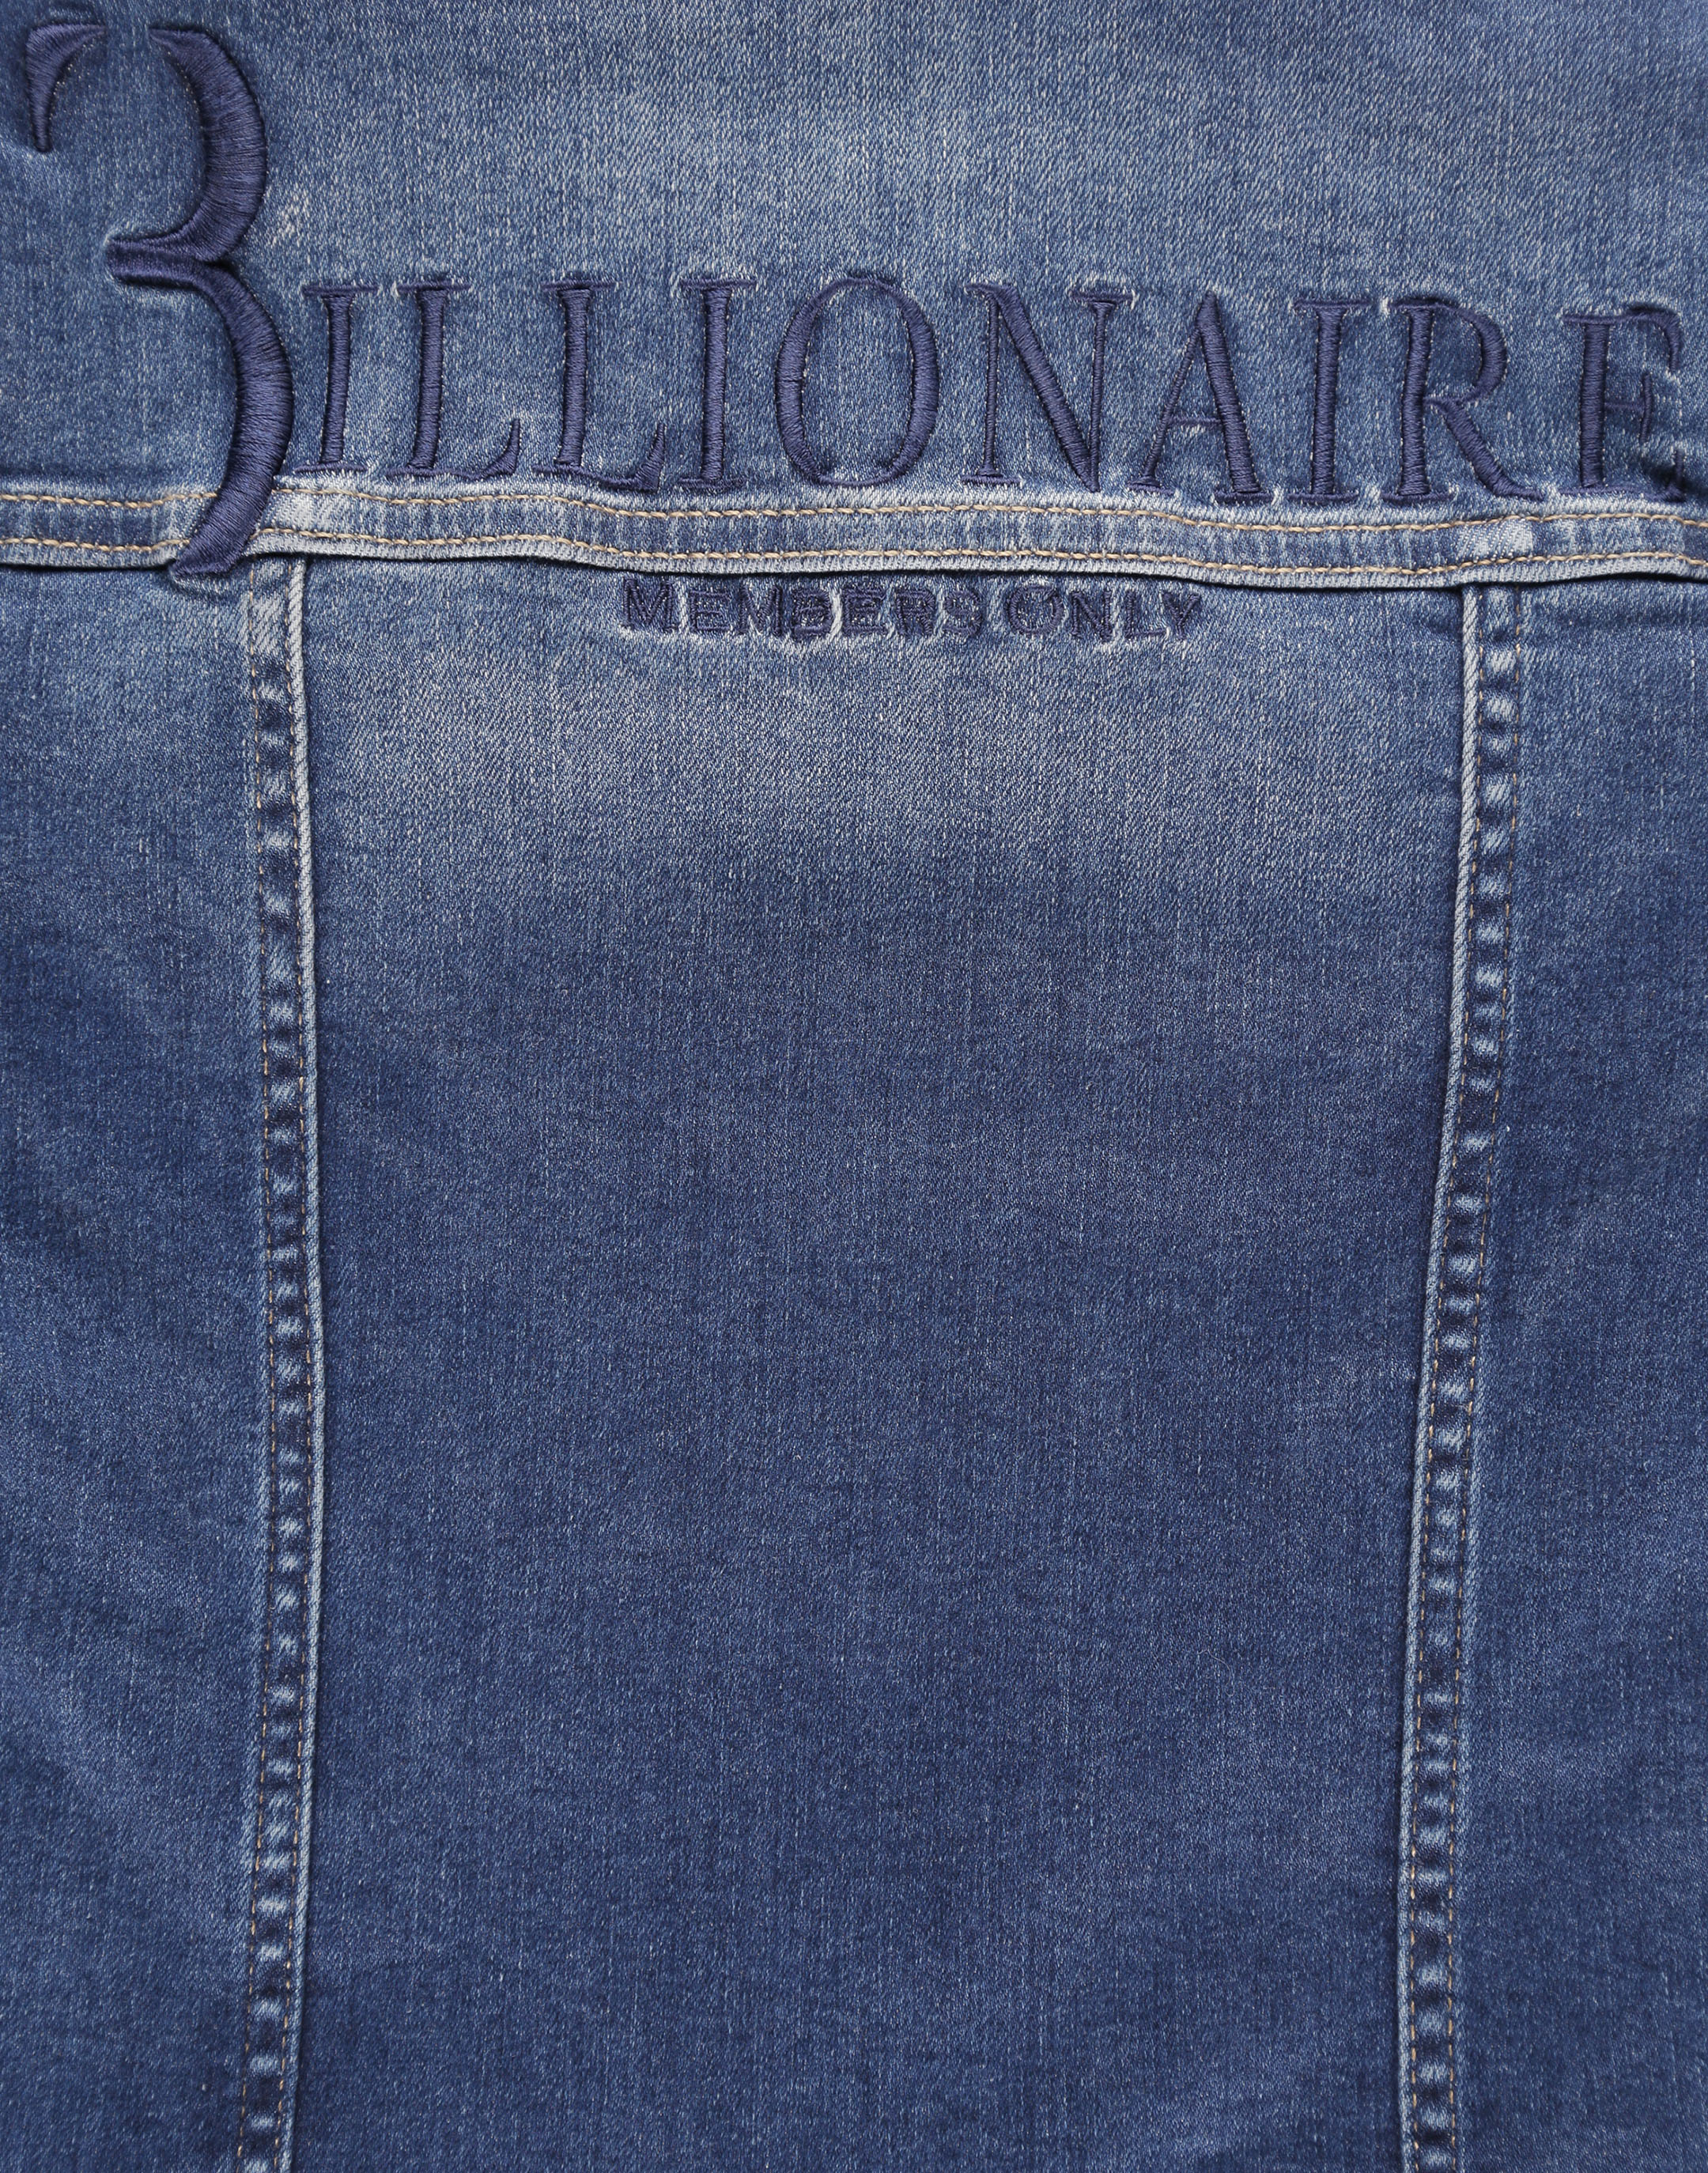 Denim Jacket Members only Billionaire